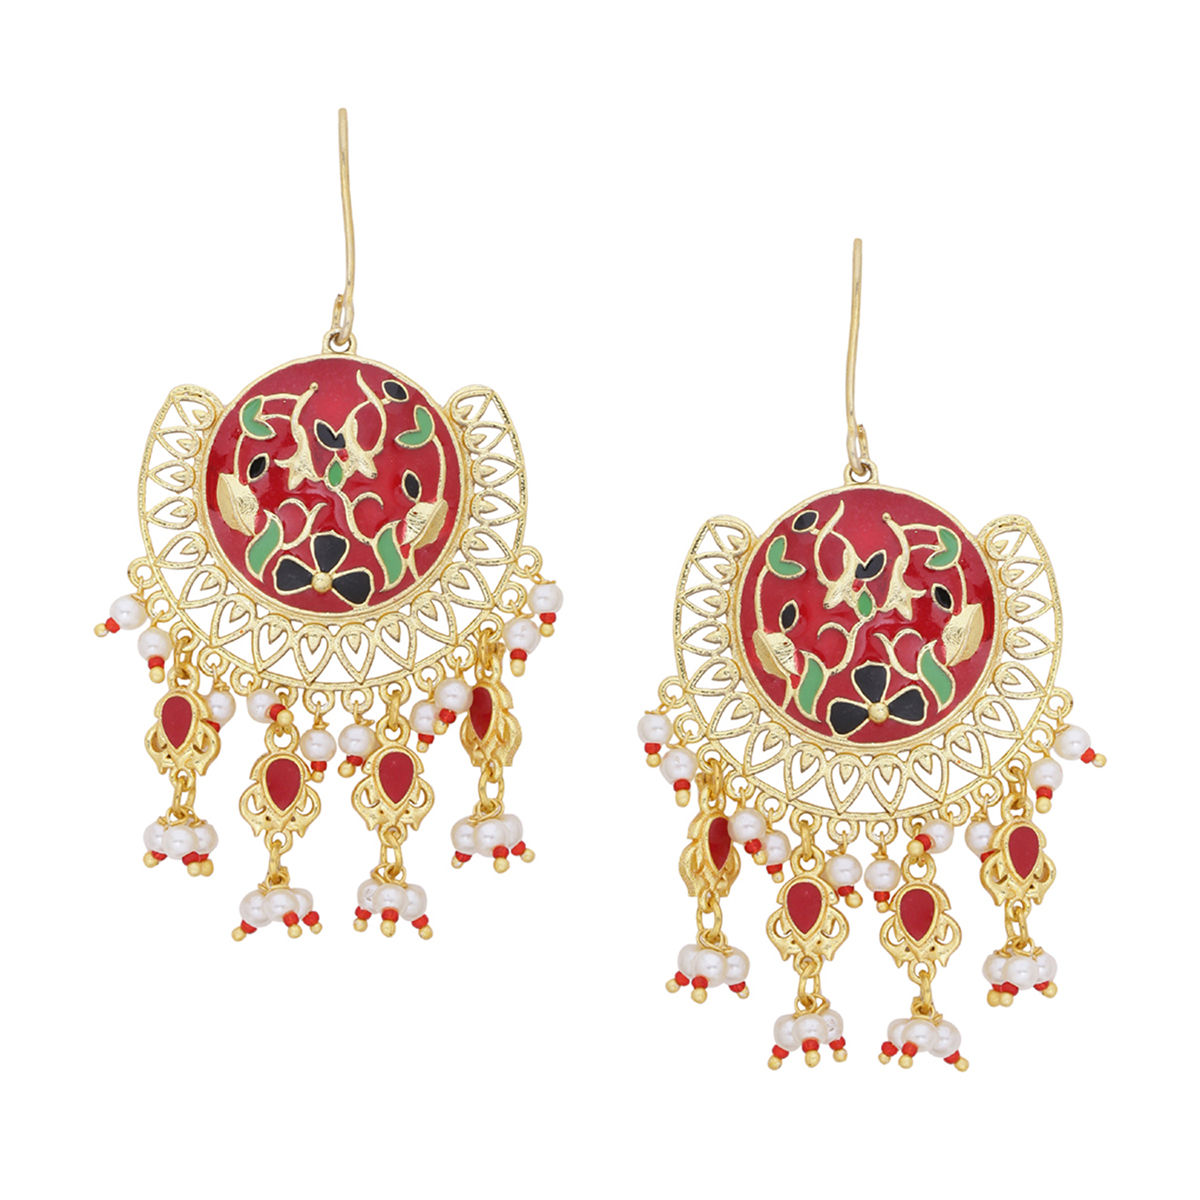 Voylla Ethnic Chandbali Design Drop Earrings Buy Voylla Ethnic Chandbali  Design Drop Earrings Online in India on Snapdeal